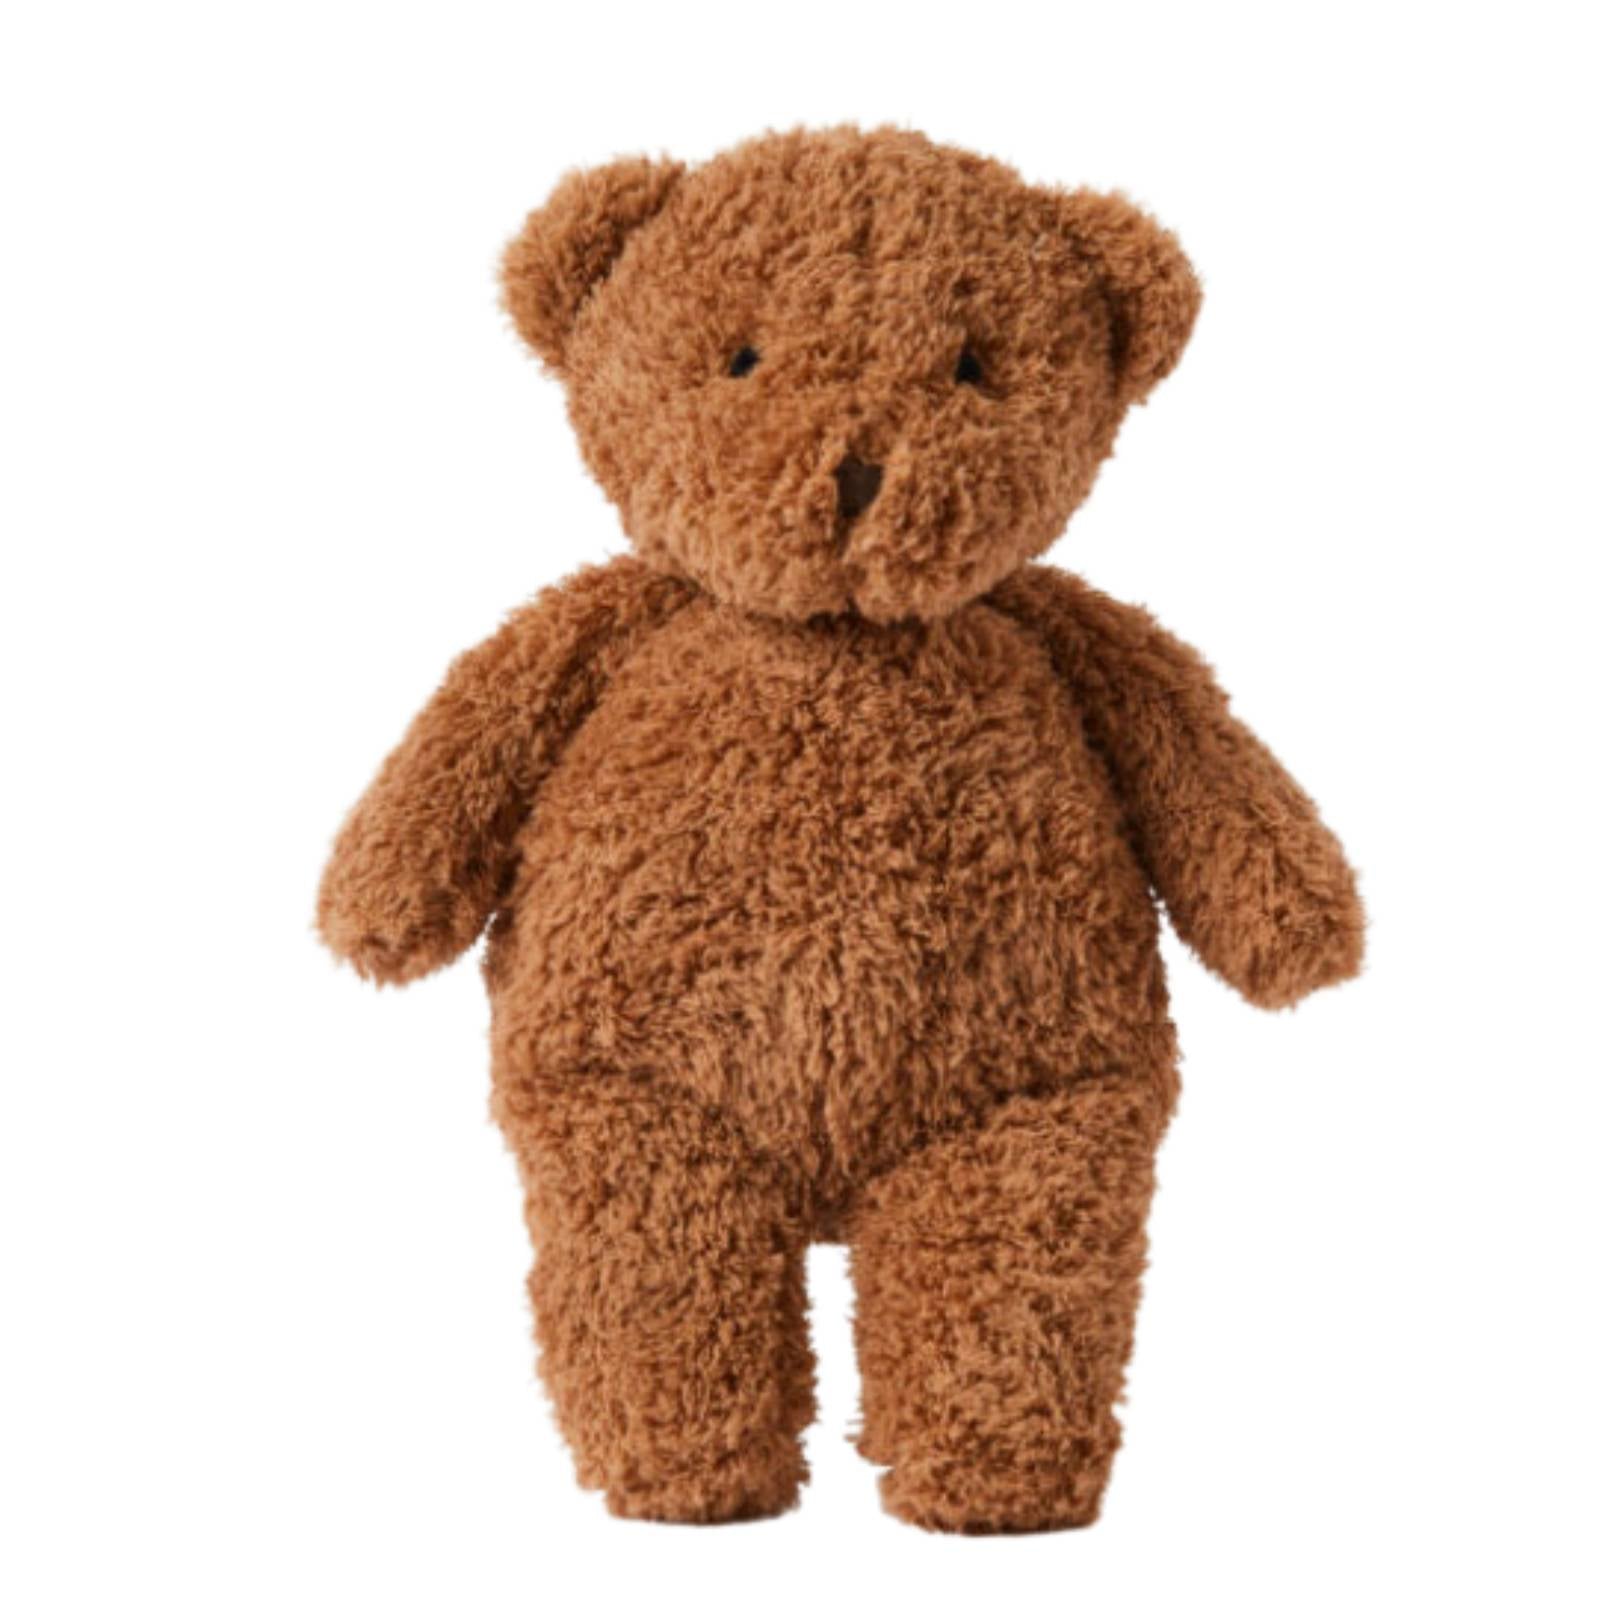 Lulu the Cuddly Bear - Cream or Brown - Jiggle & Giggle